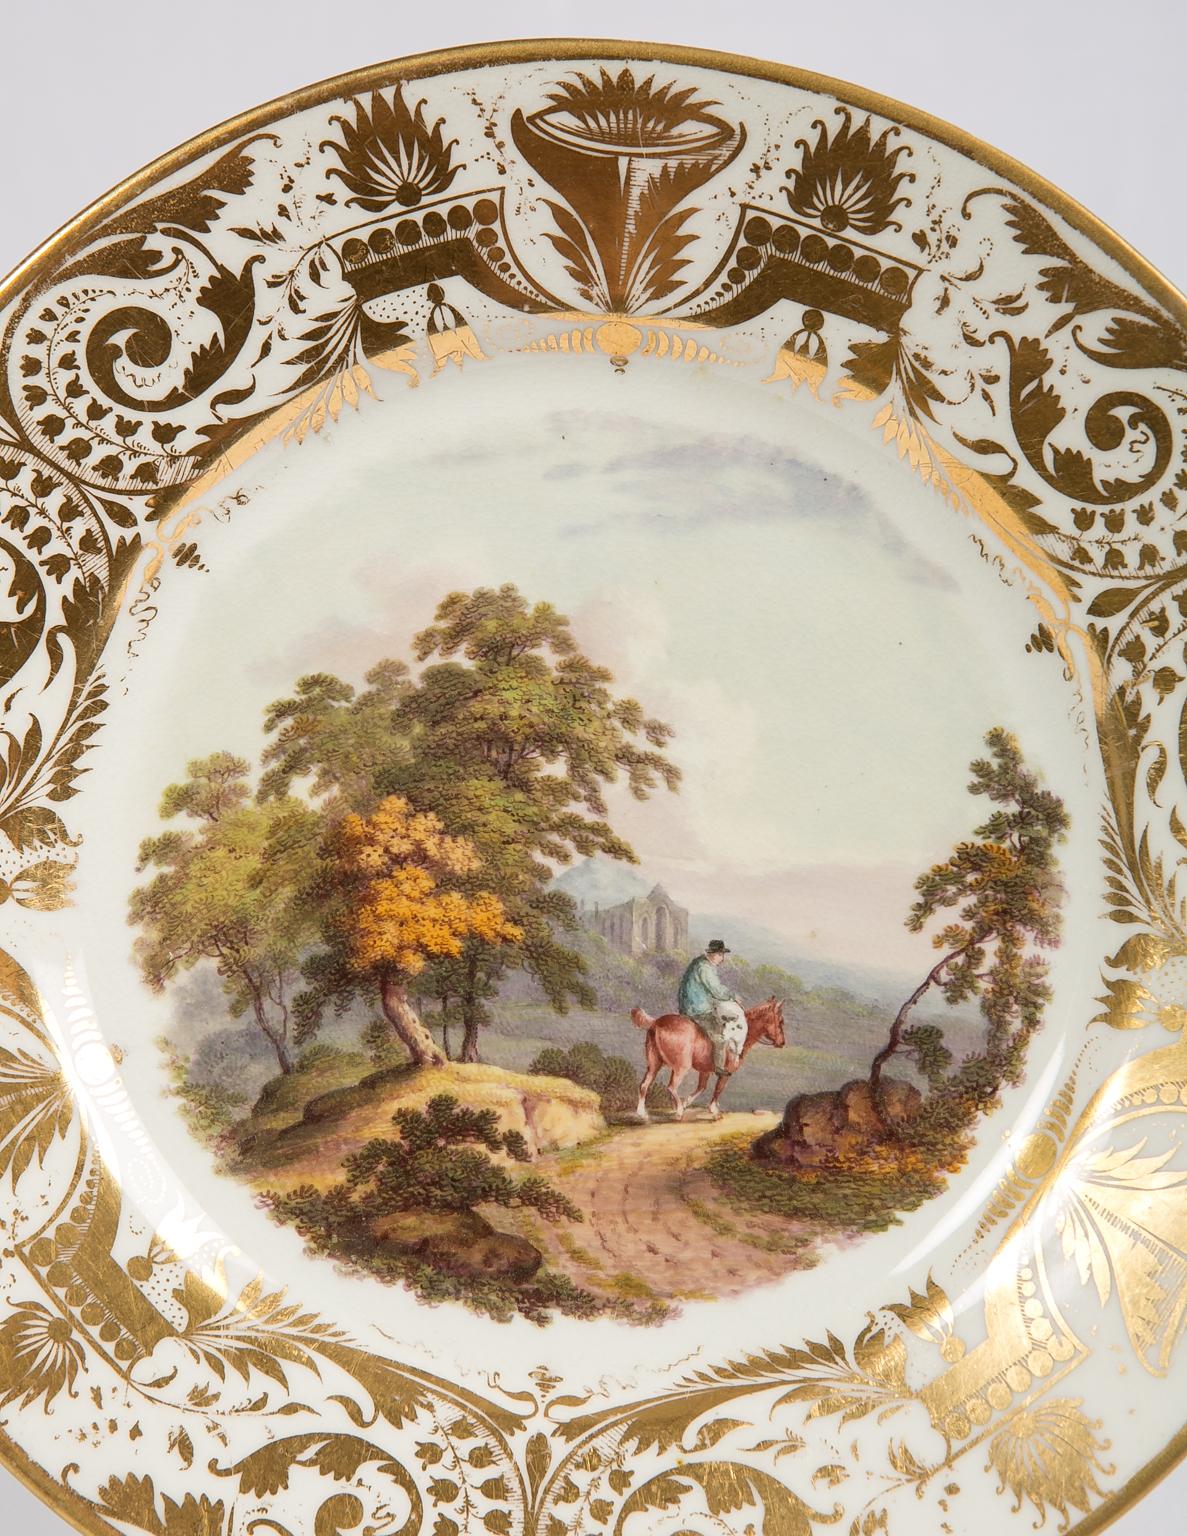 Romantic Antique Porcelain Dishes with Hand-Painted Landscape Scenes